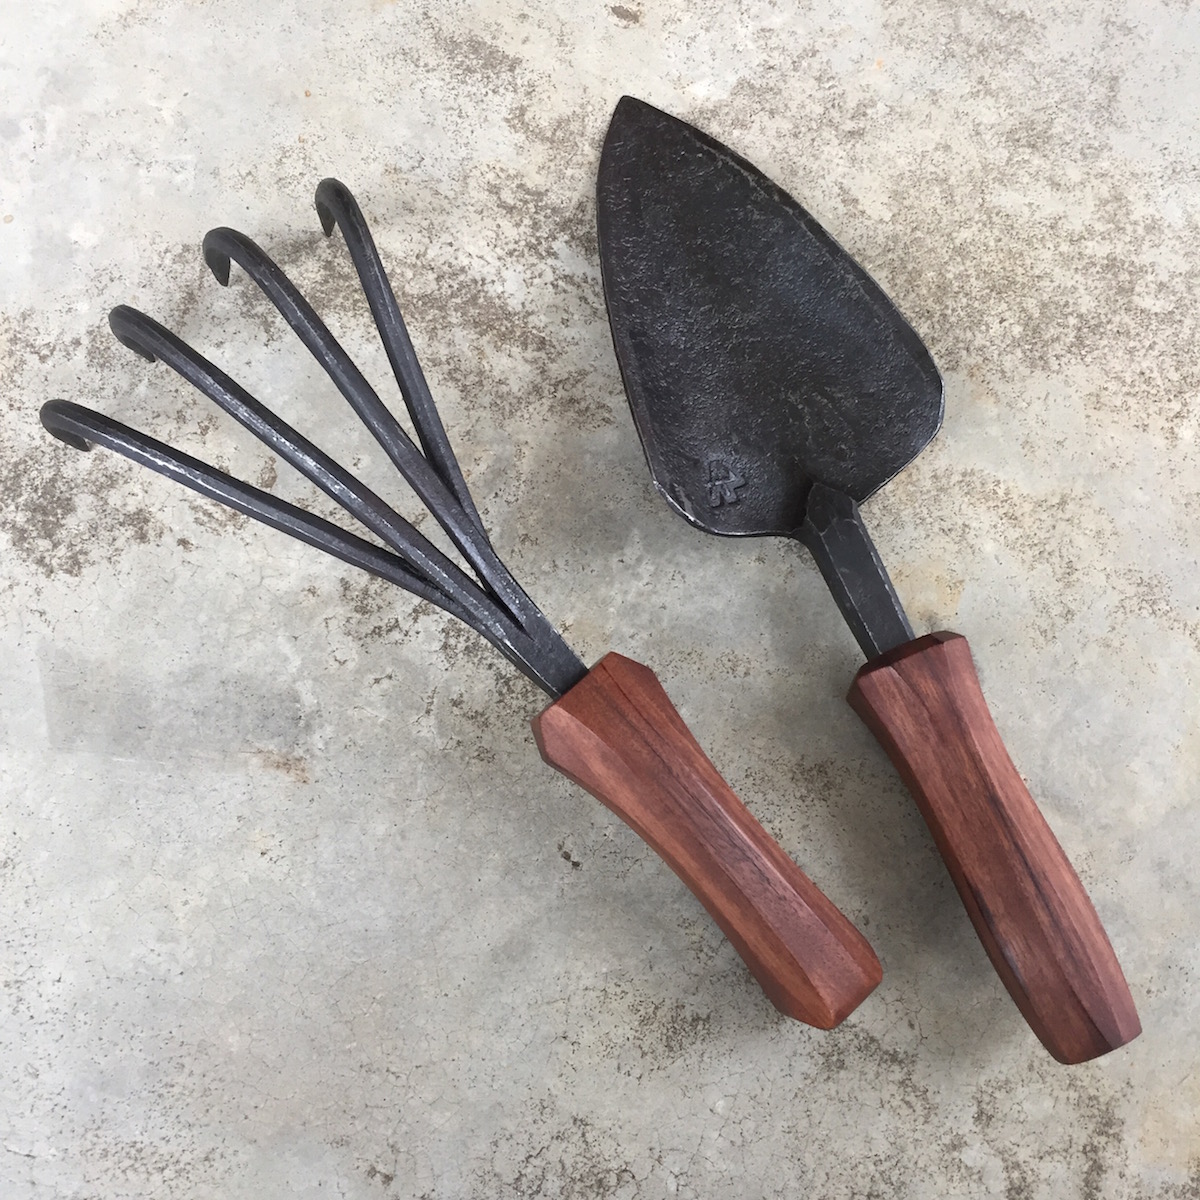 bryant garden tools '17.jpg